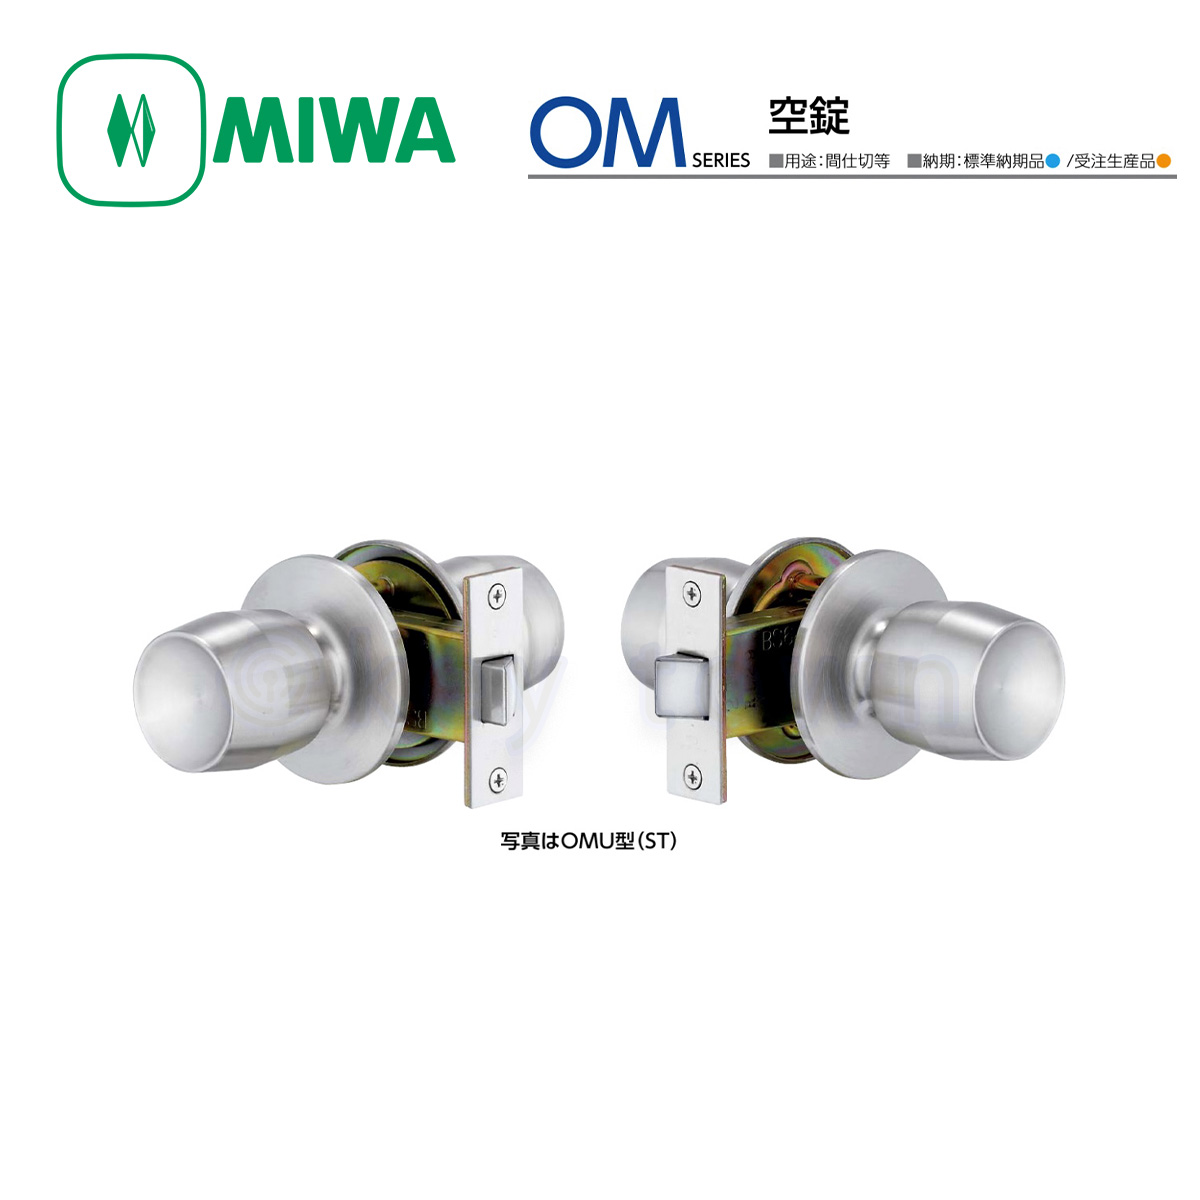 MIWA 【美和ロック】 空錠 [MIWA-OM] OMU型